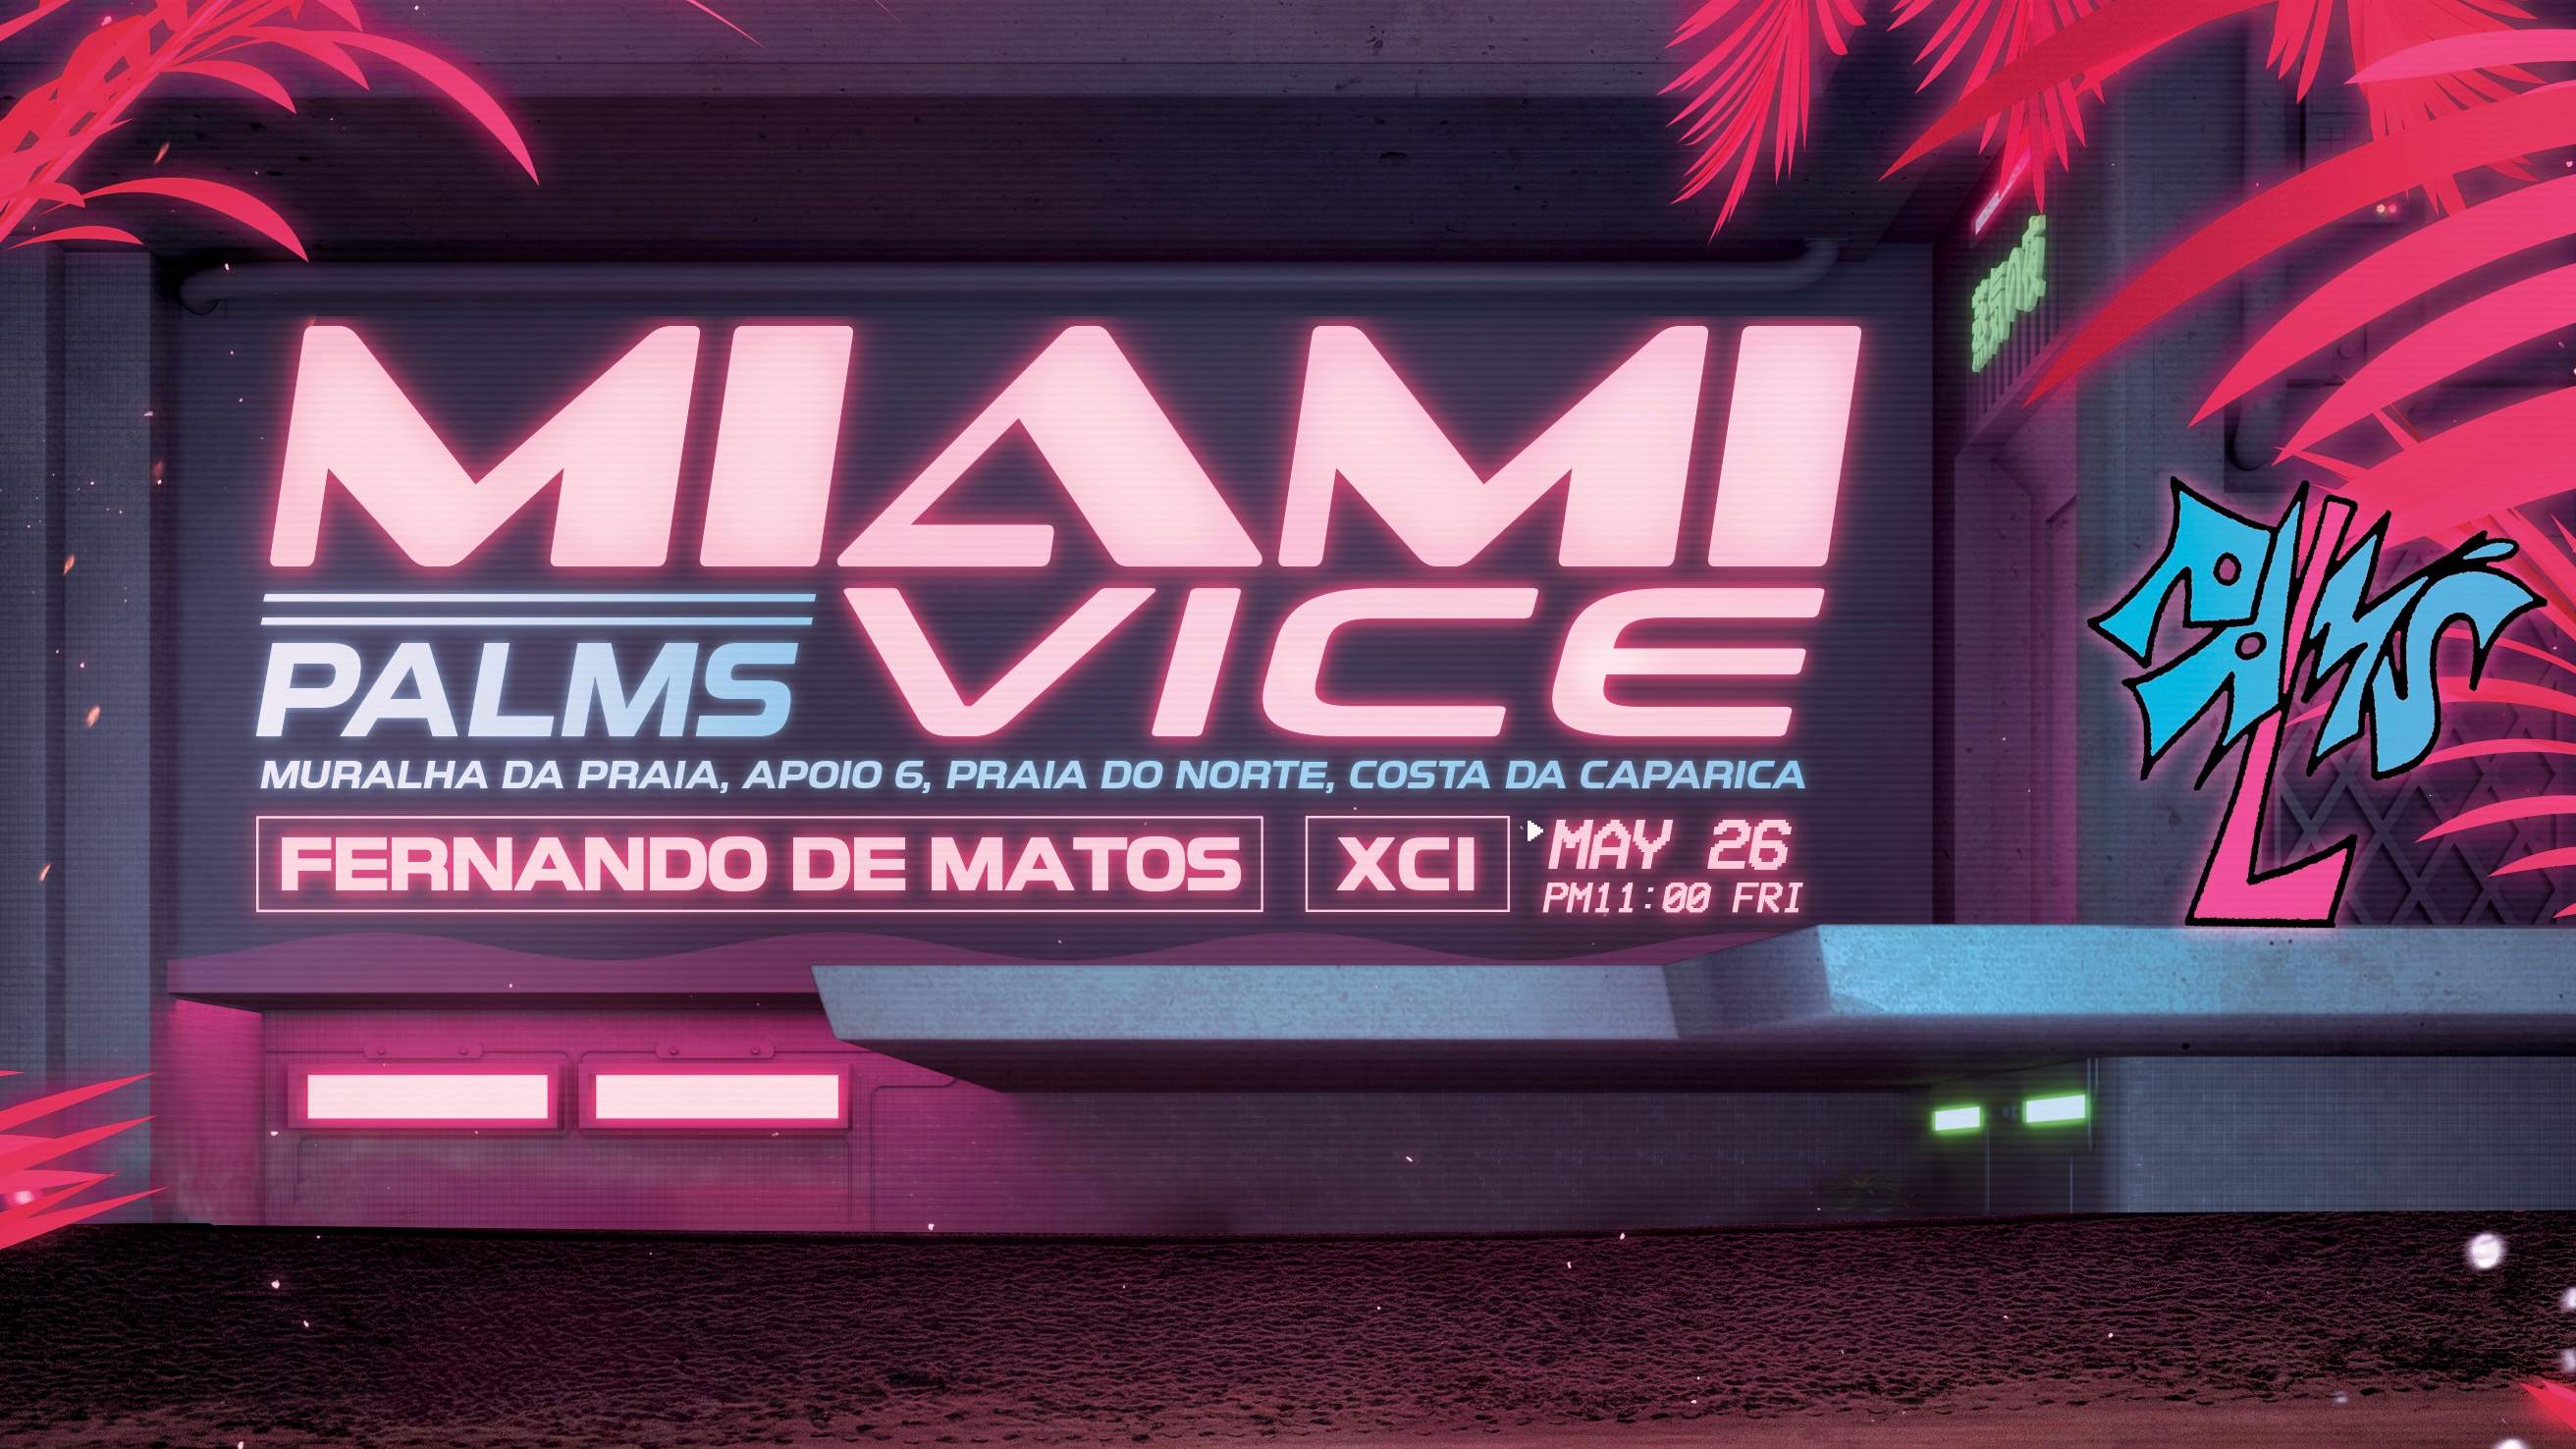 Miami Vice at Palm's by Dieze at Palms Dr.Bernard, Lisbon